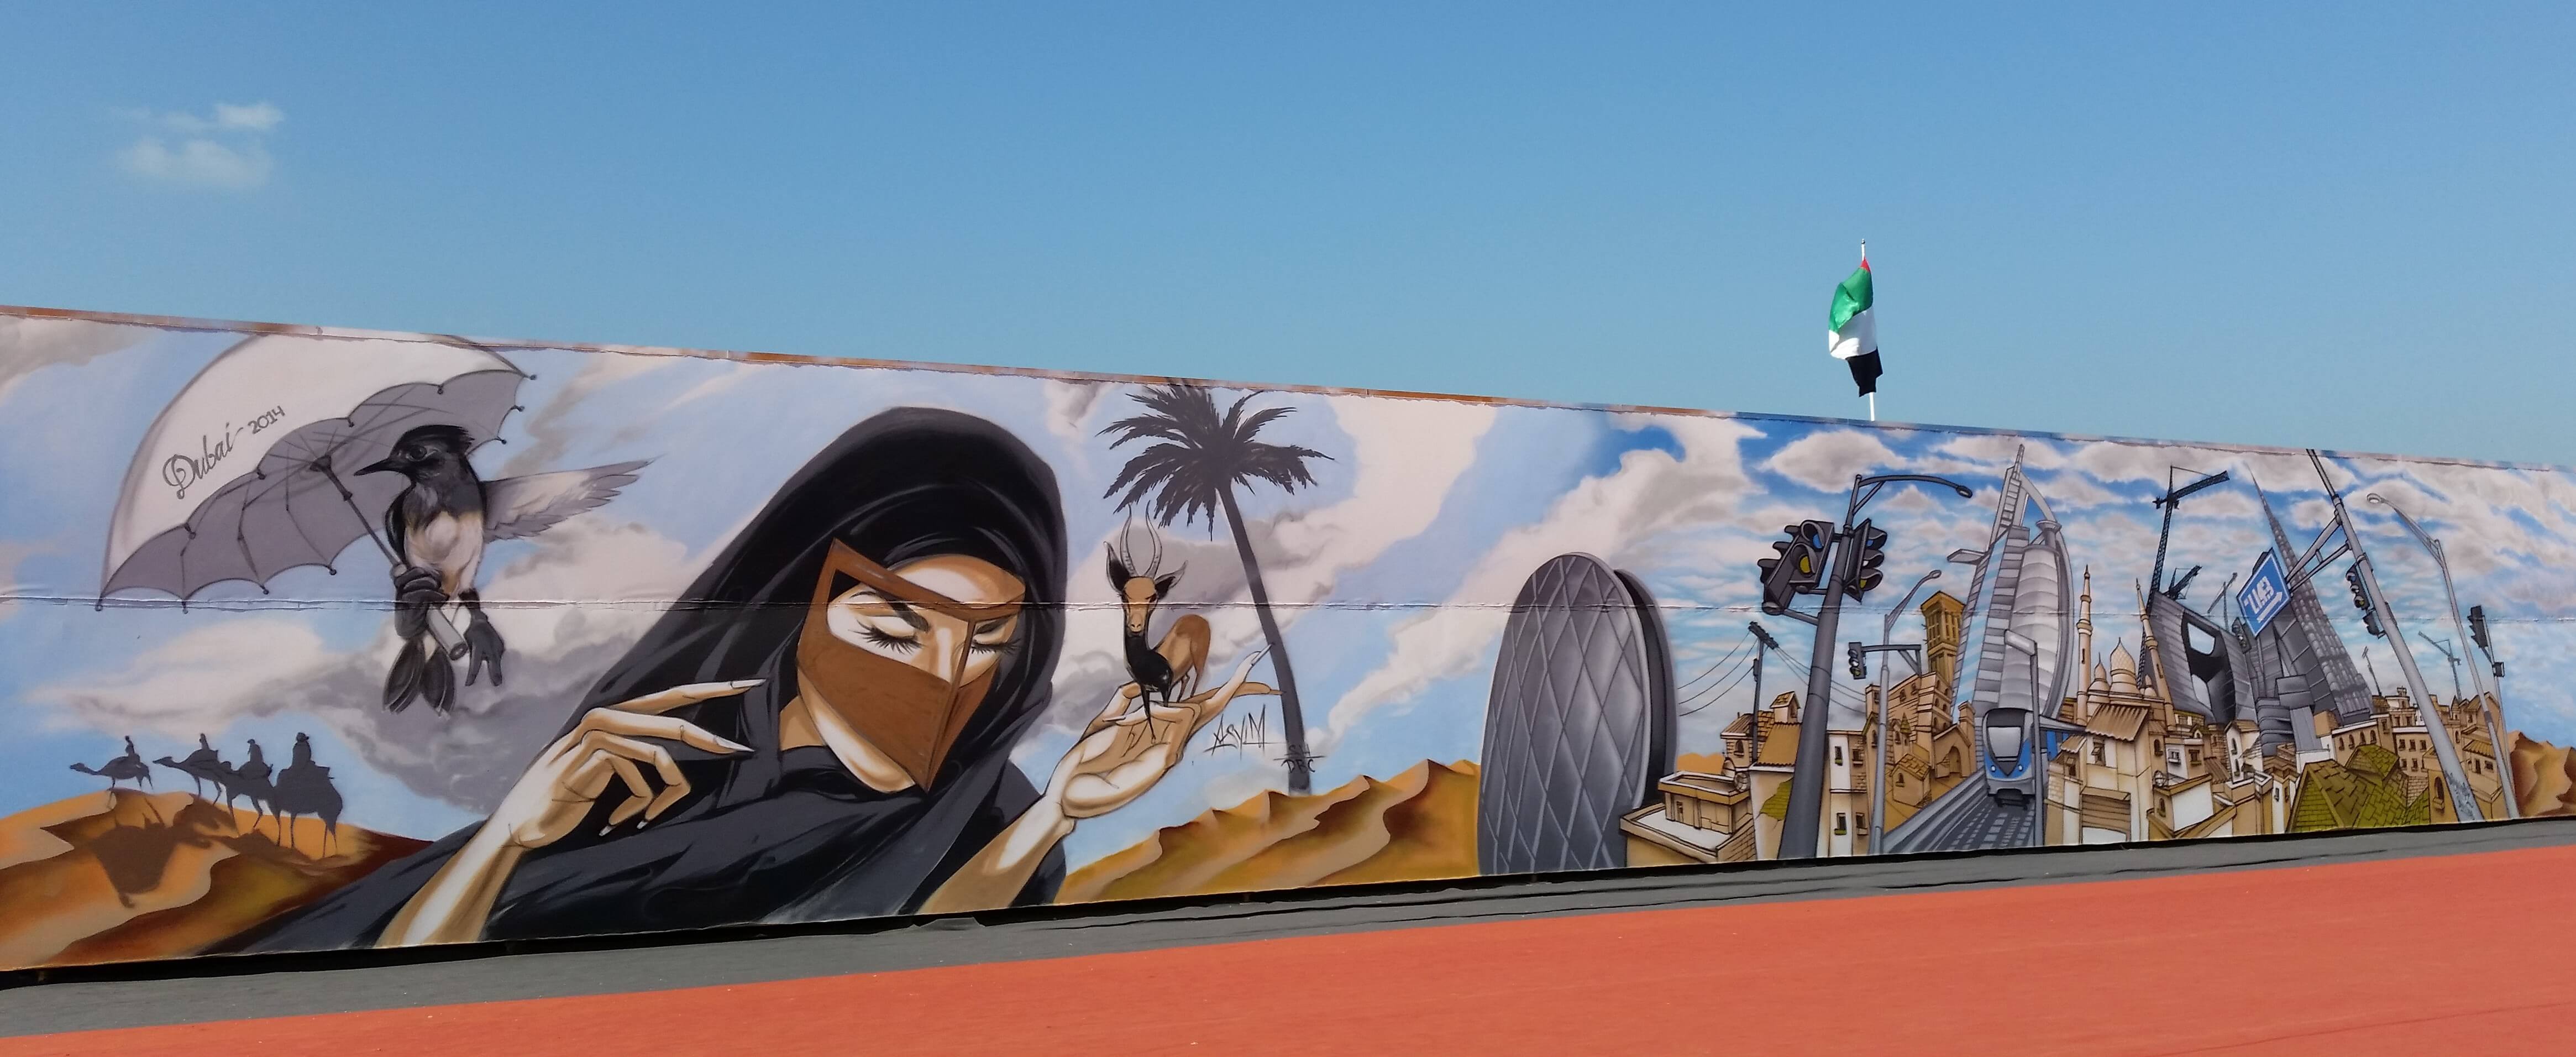 Graffiti in Dubai pays tribute to UAE culture. Image: Sajjeling